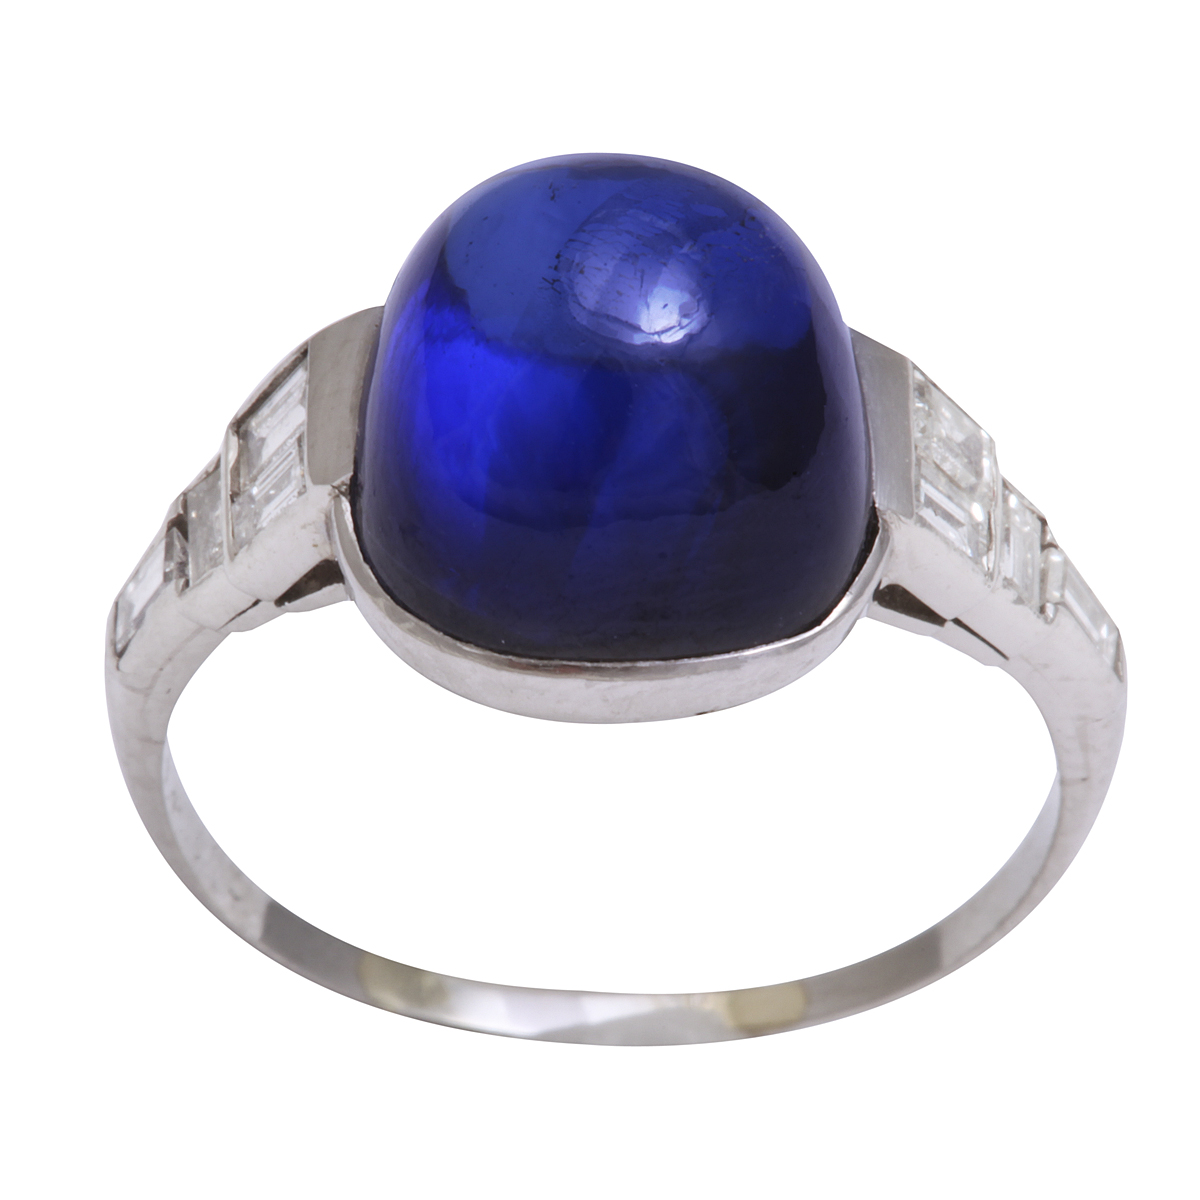 HOLD Stunning Bvlgari 18k White Gold Diamond Sugarloaf Cabochon Sapphire  Ring